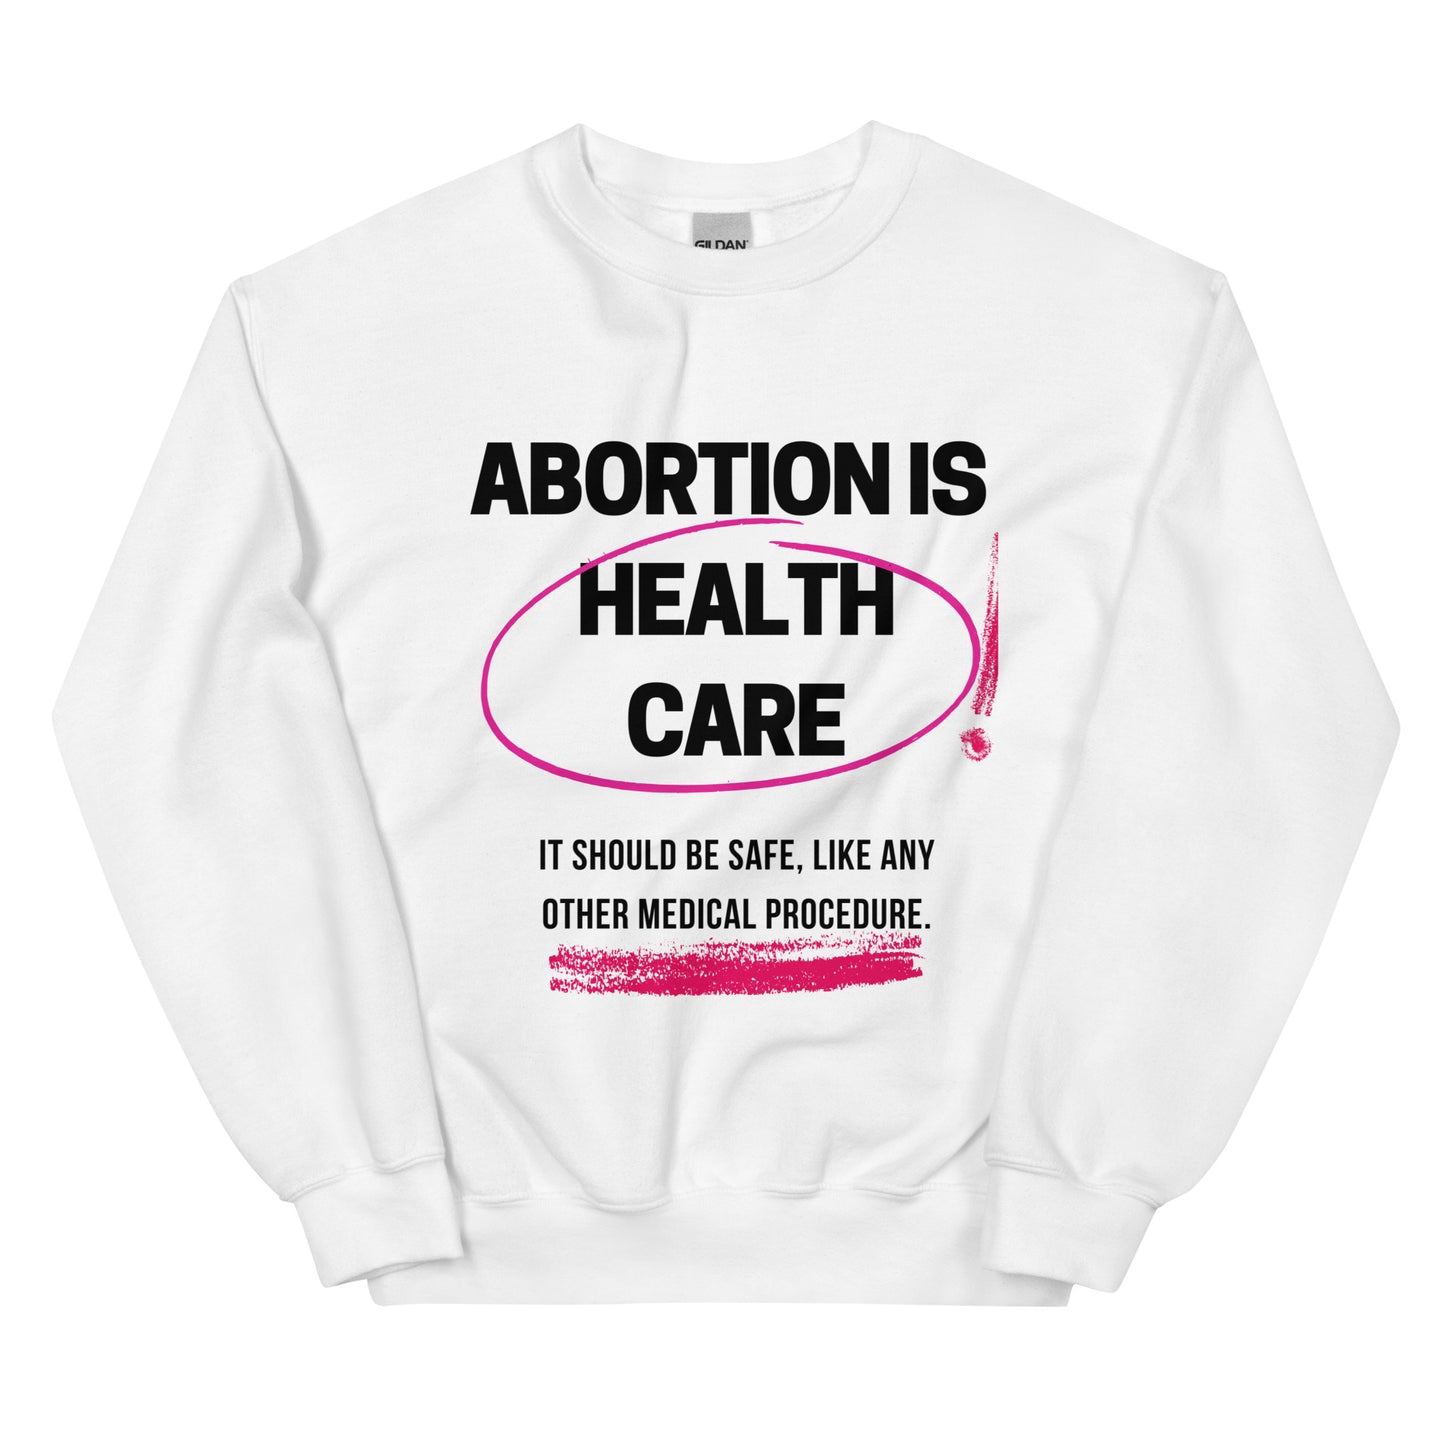 Abortion is Healthcare Sweatshirt